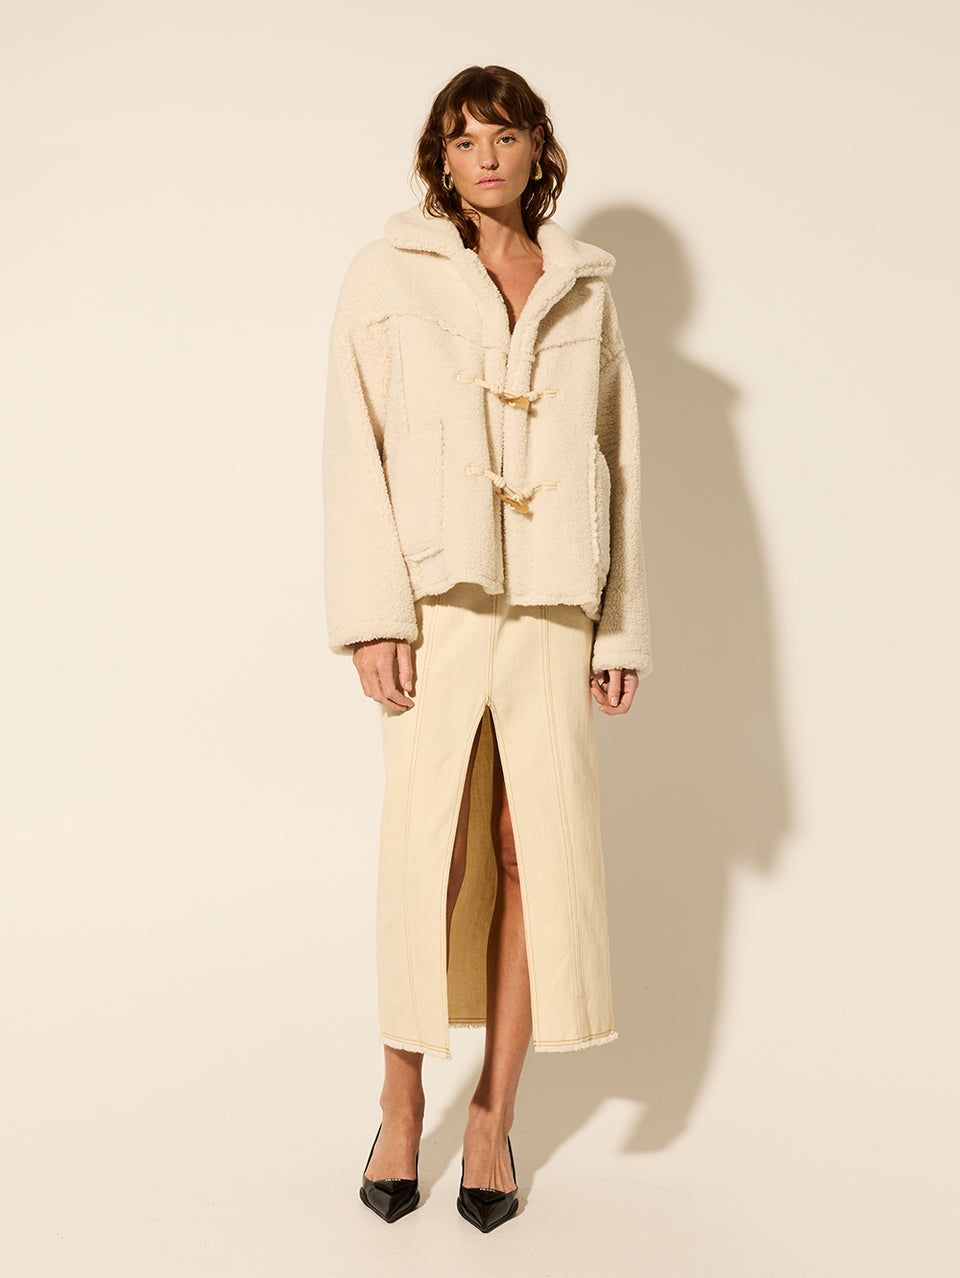 Lianna Jacket KIVARI | Model wears cream reversible jacket